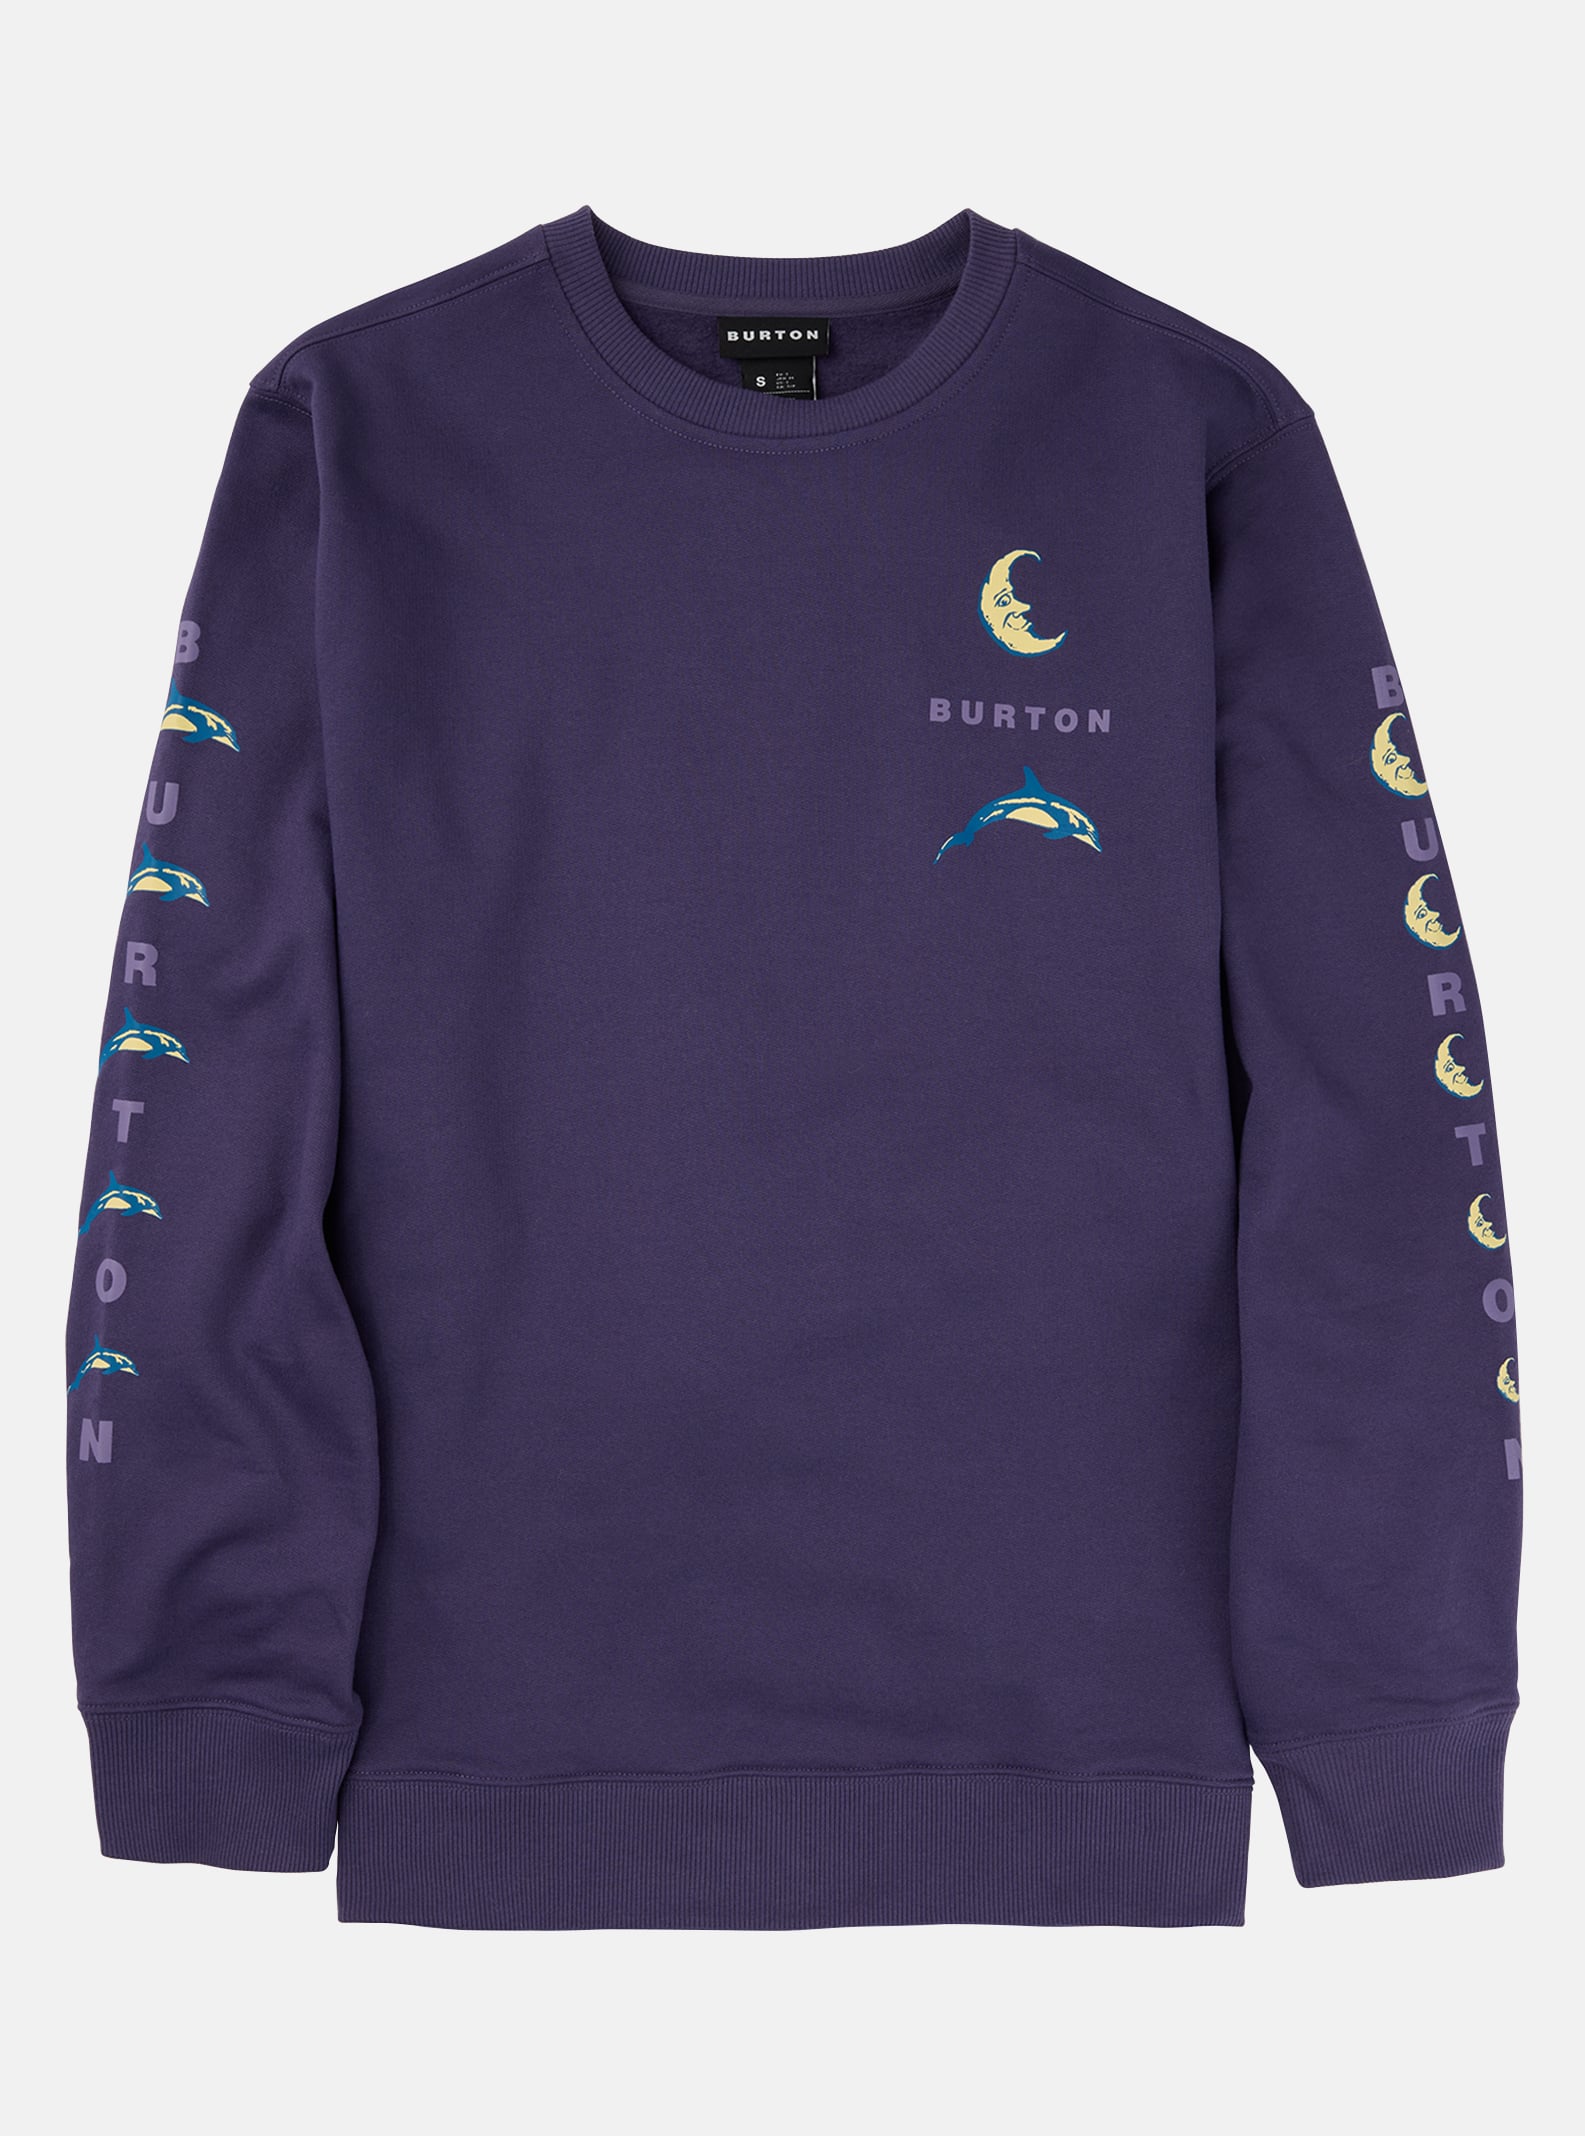 Burton 1996 Dolphin Crew sweatshirt, Violet Halo, M